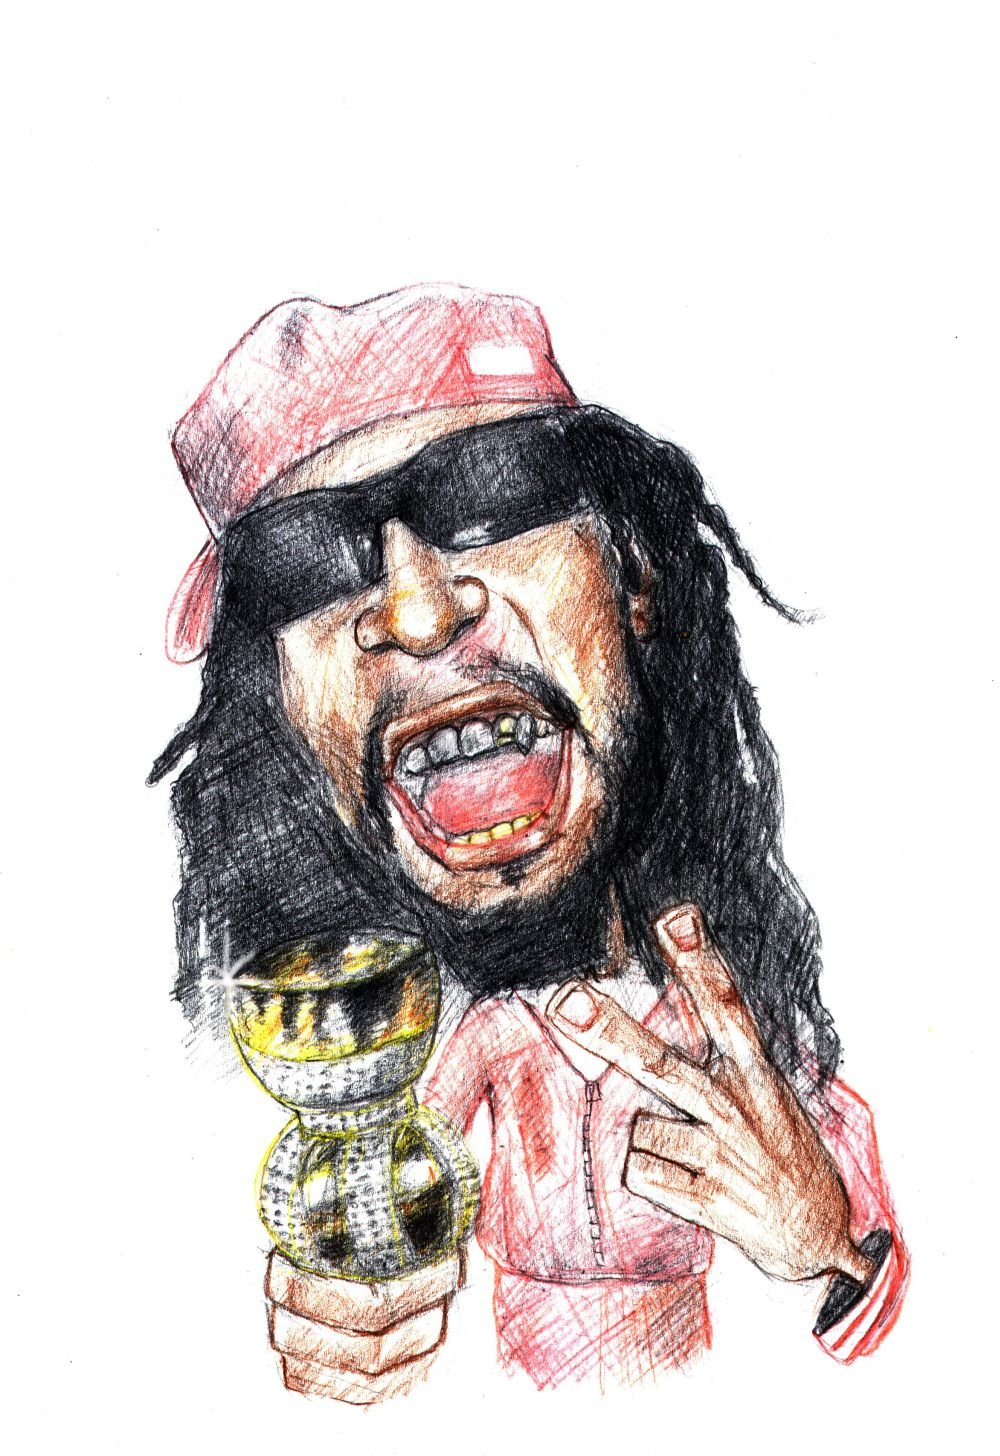 Lil Jon by addy2 on